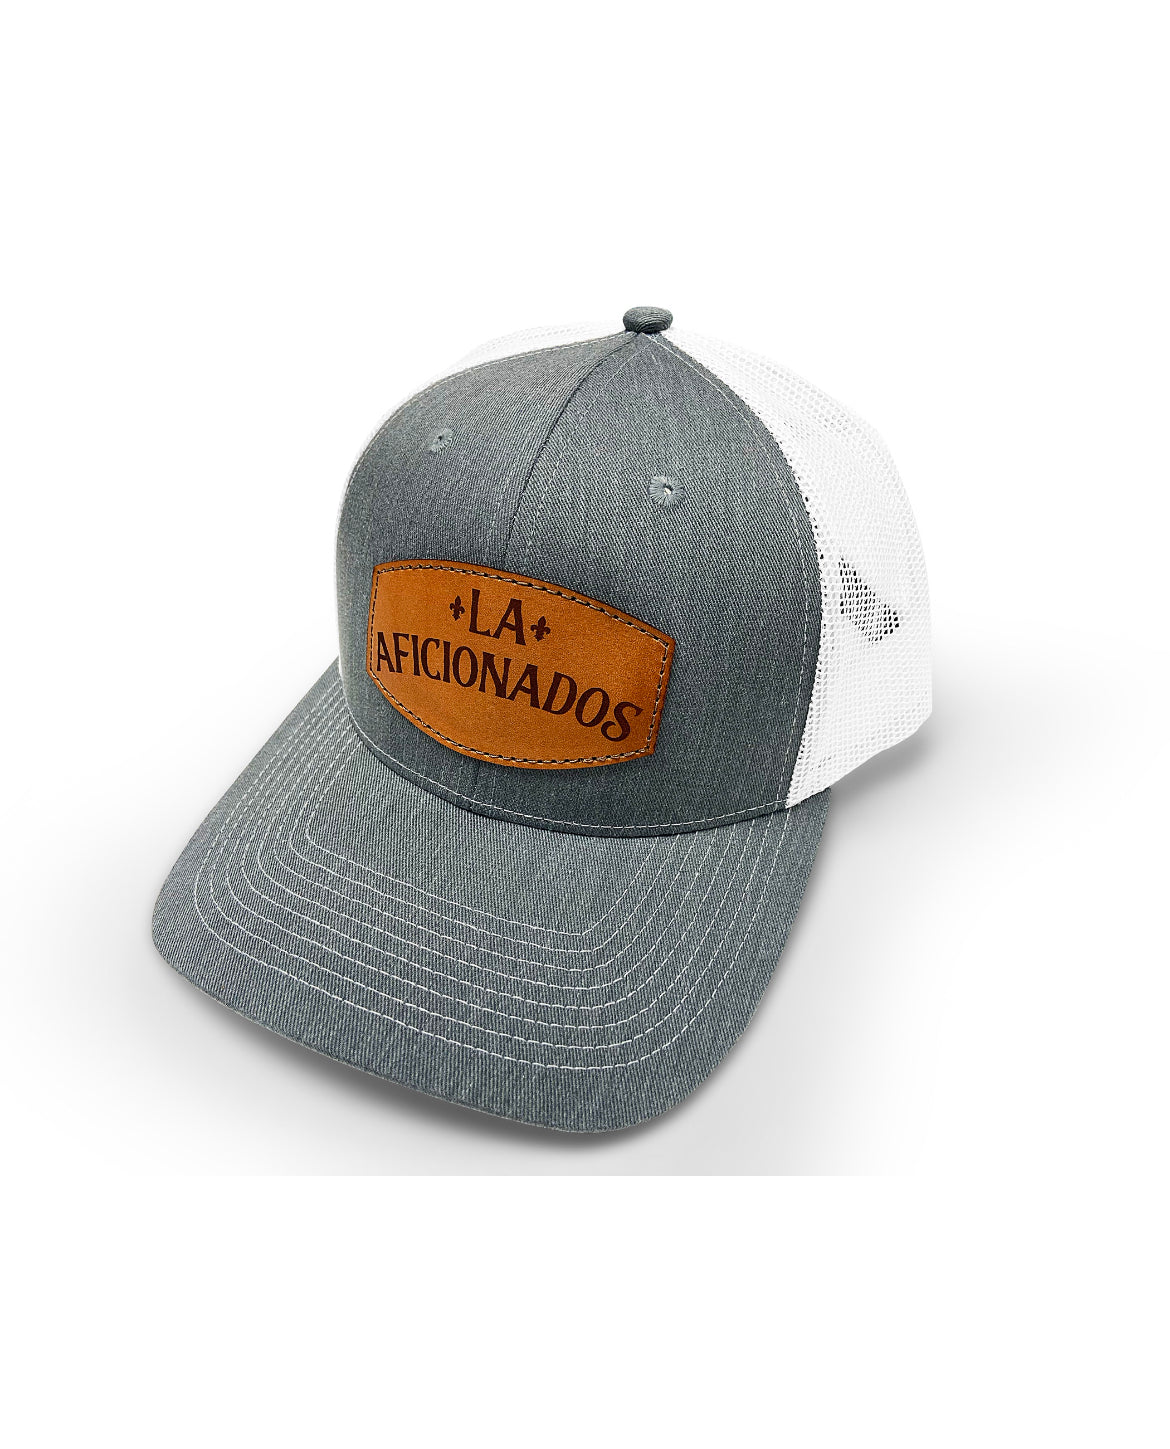 OG LA Aficionados Trucker Hat